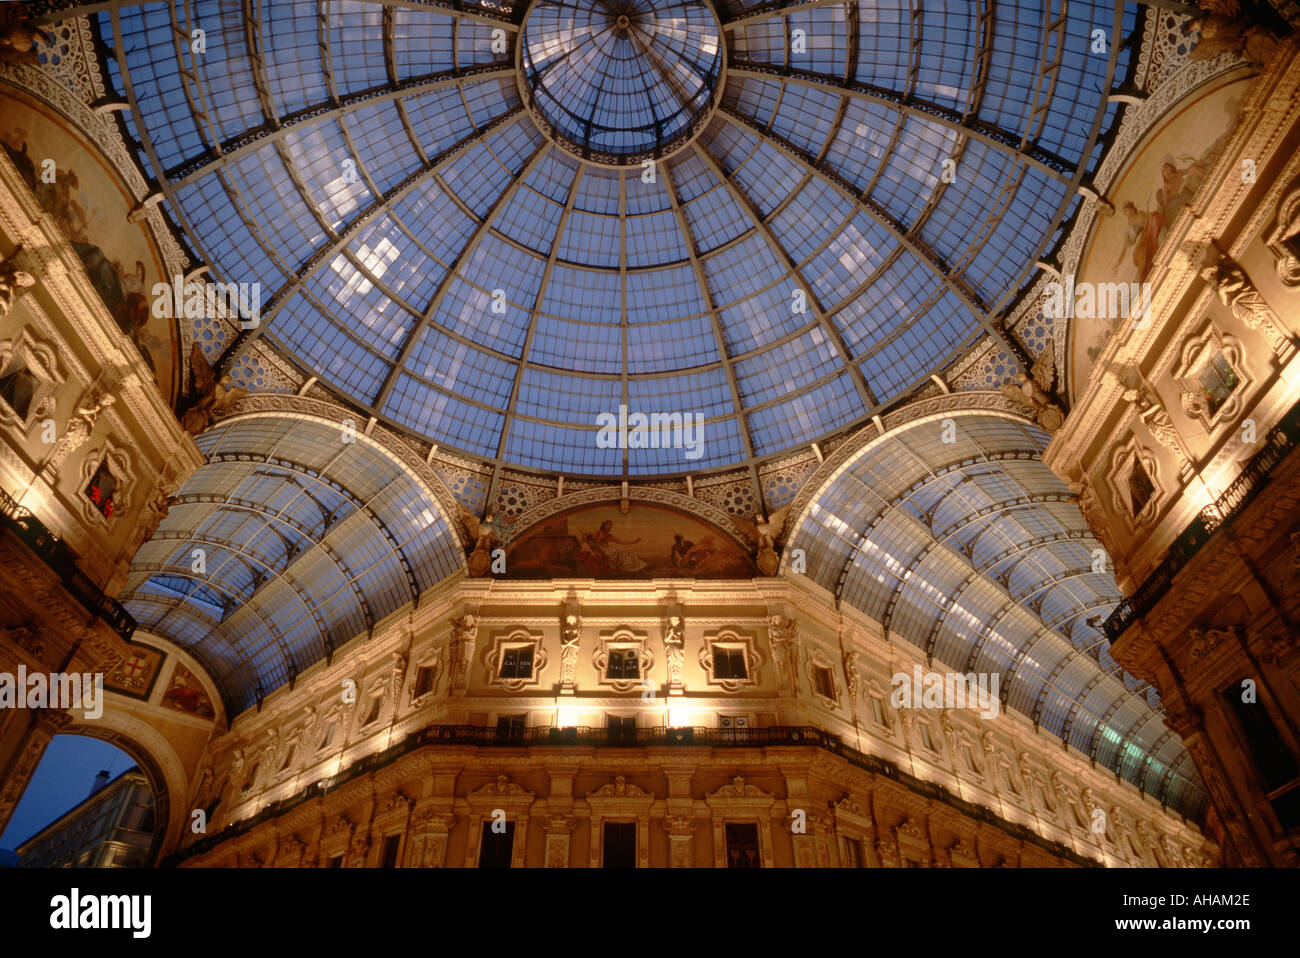 Milan Italy Galleria Vittorio Emanuele II Victor Emmanuel gallery shopping arcade Stock Photo